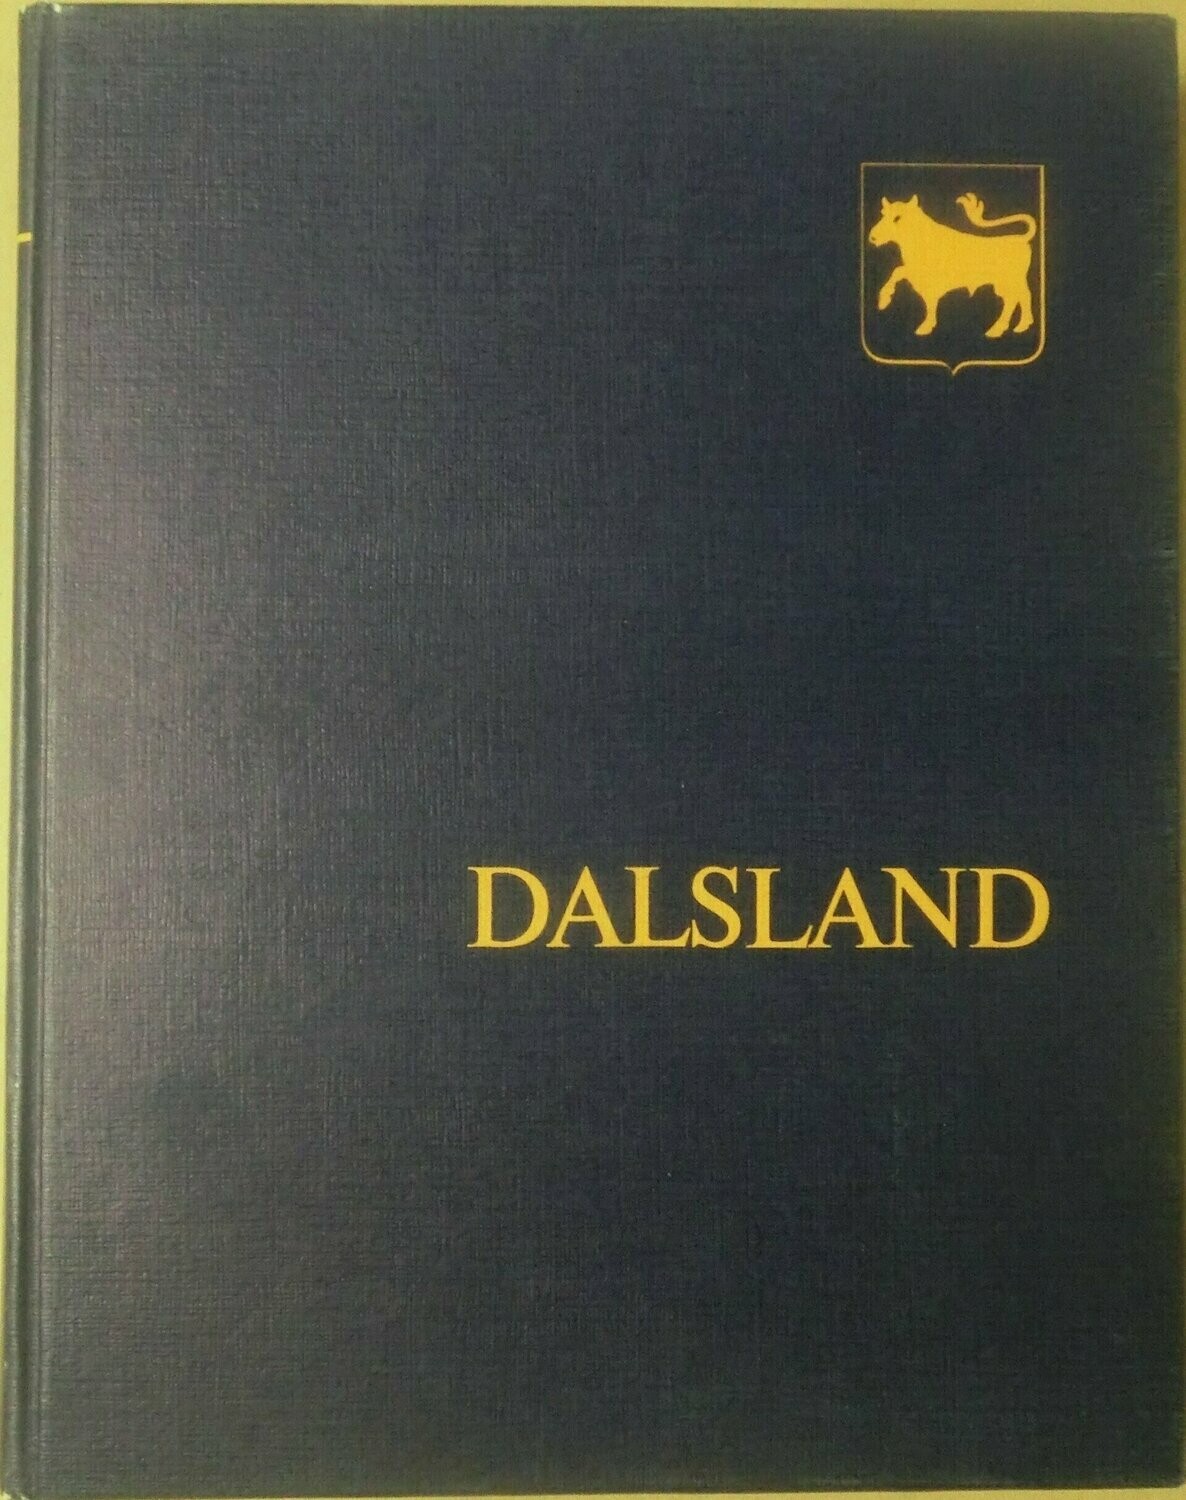 STF årsskrift 1981 - Dalsland